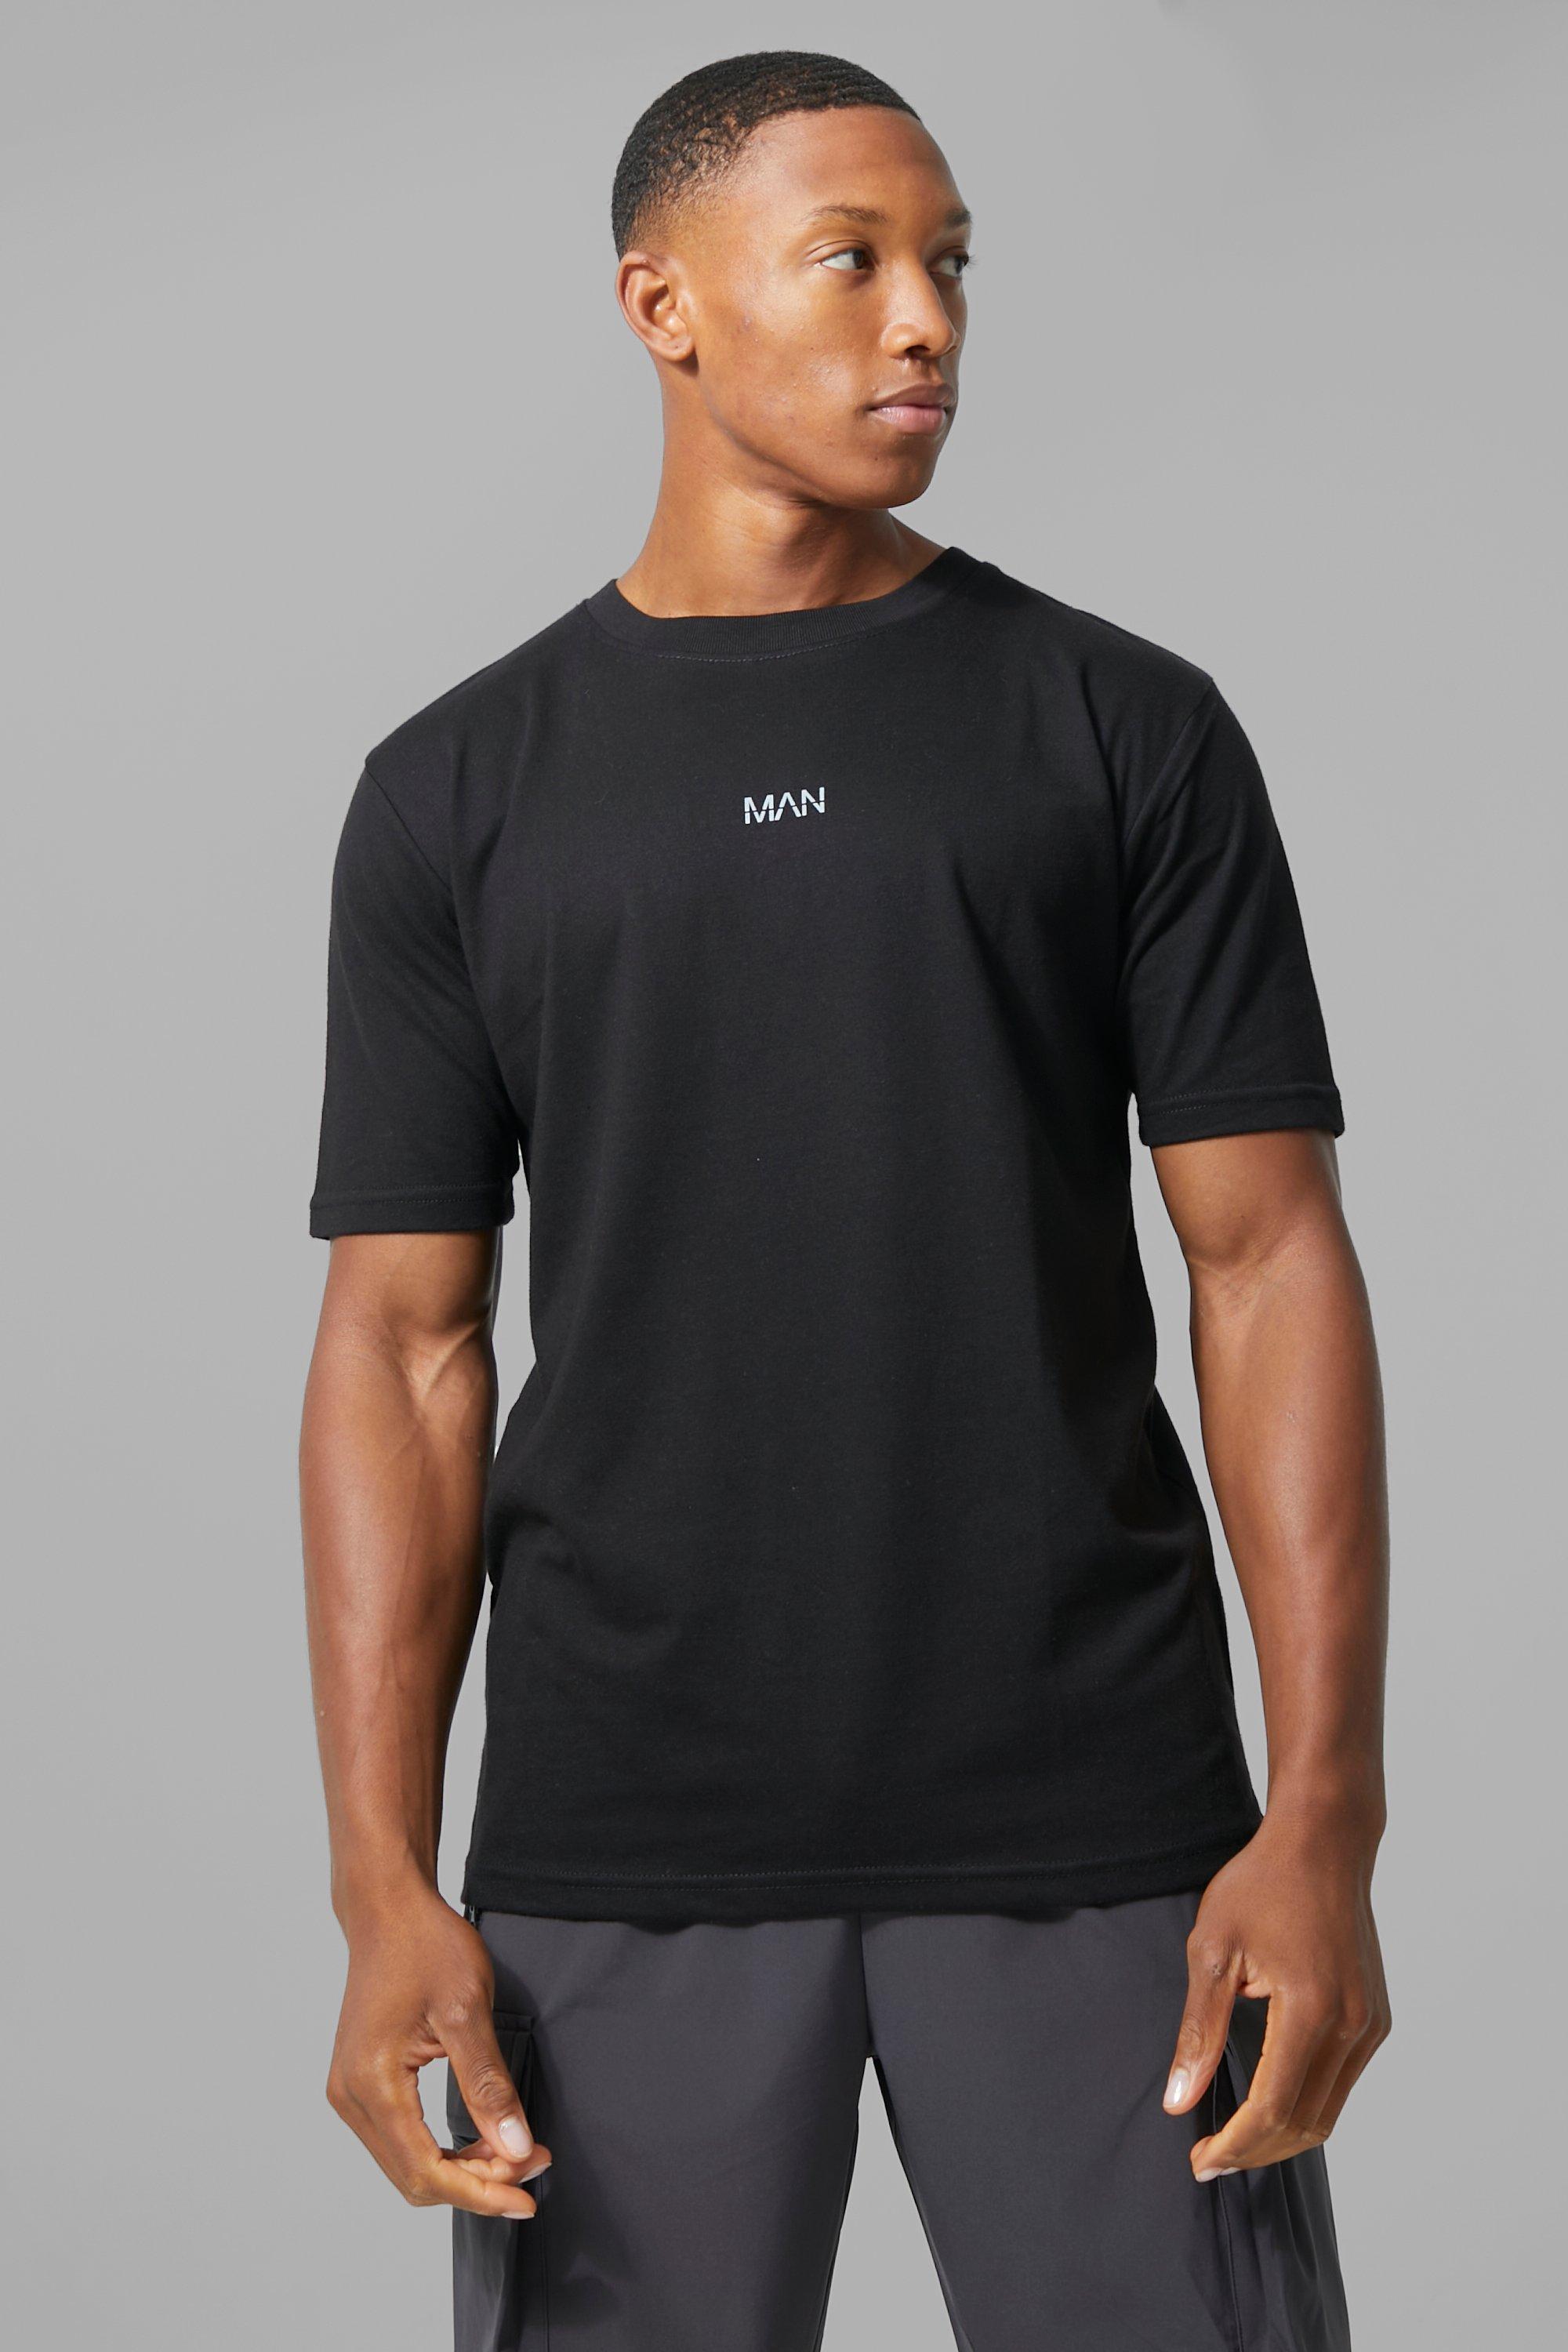 womens man active gym basic t-shirt - black - xs, black